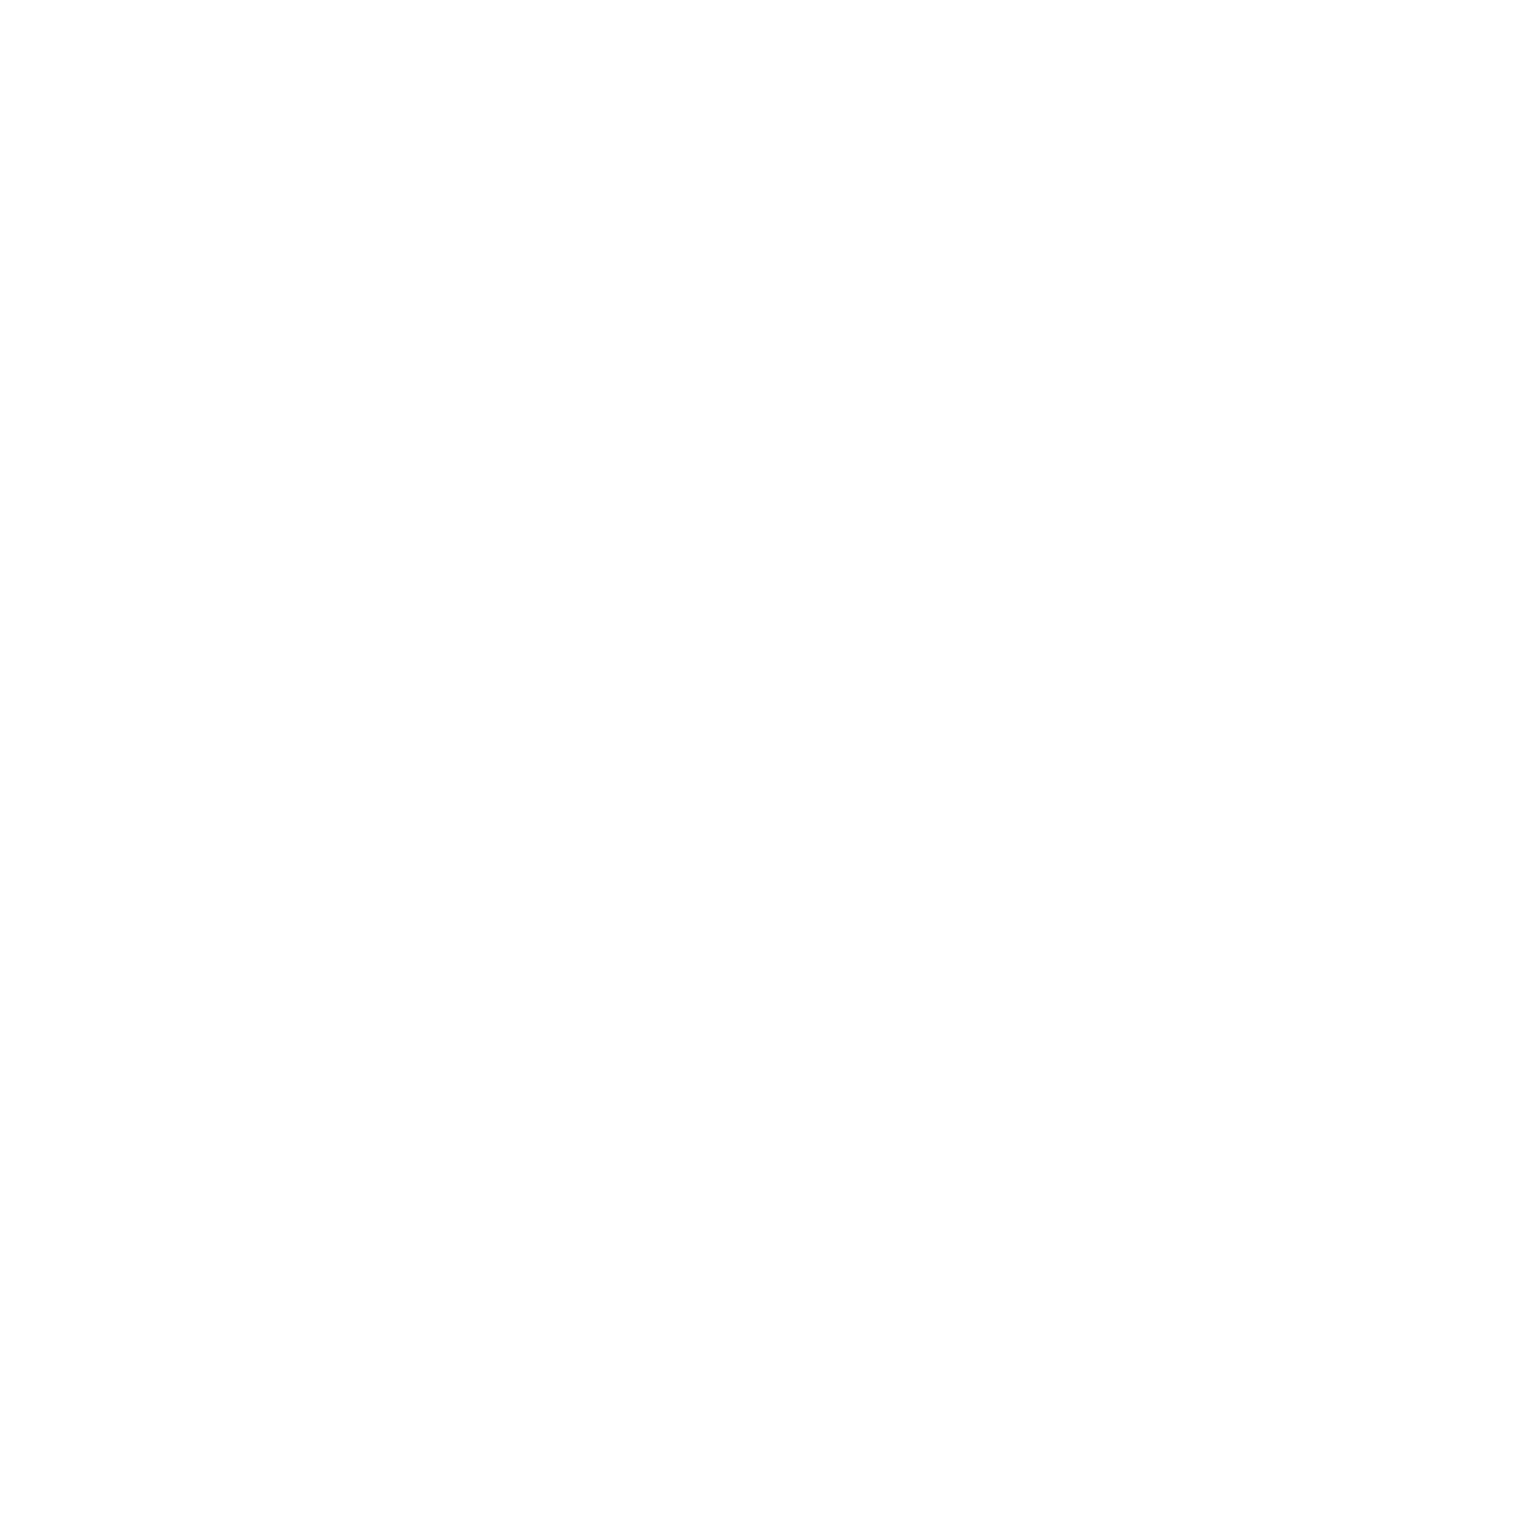 ASGN logo for dark backgrounds (transparent PNG)